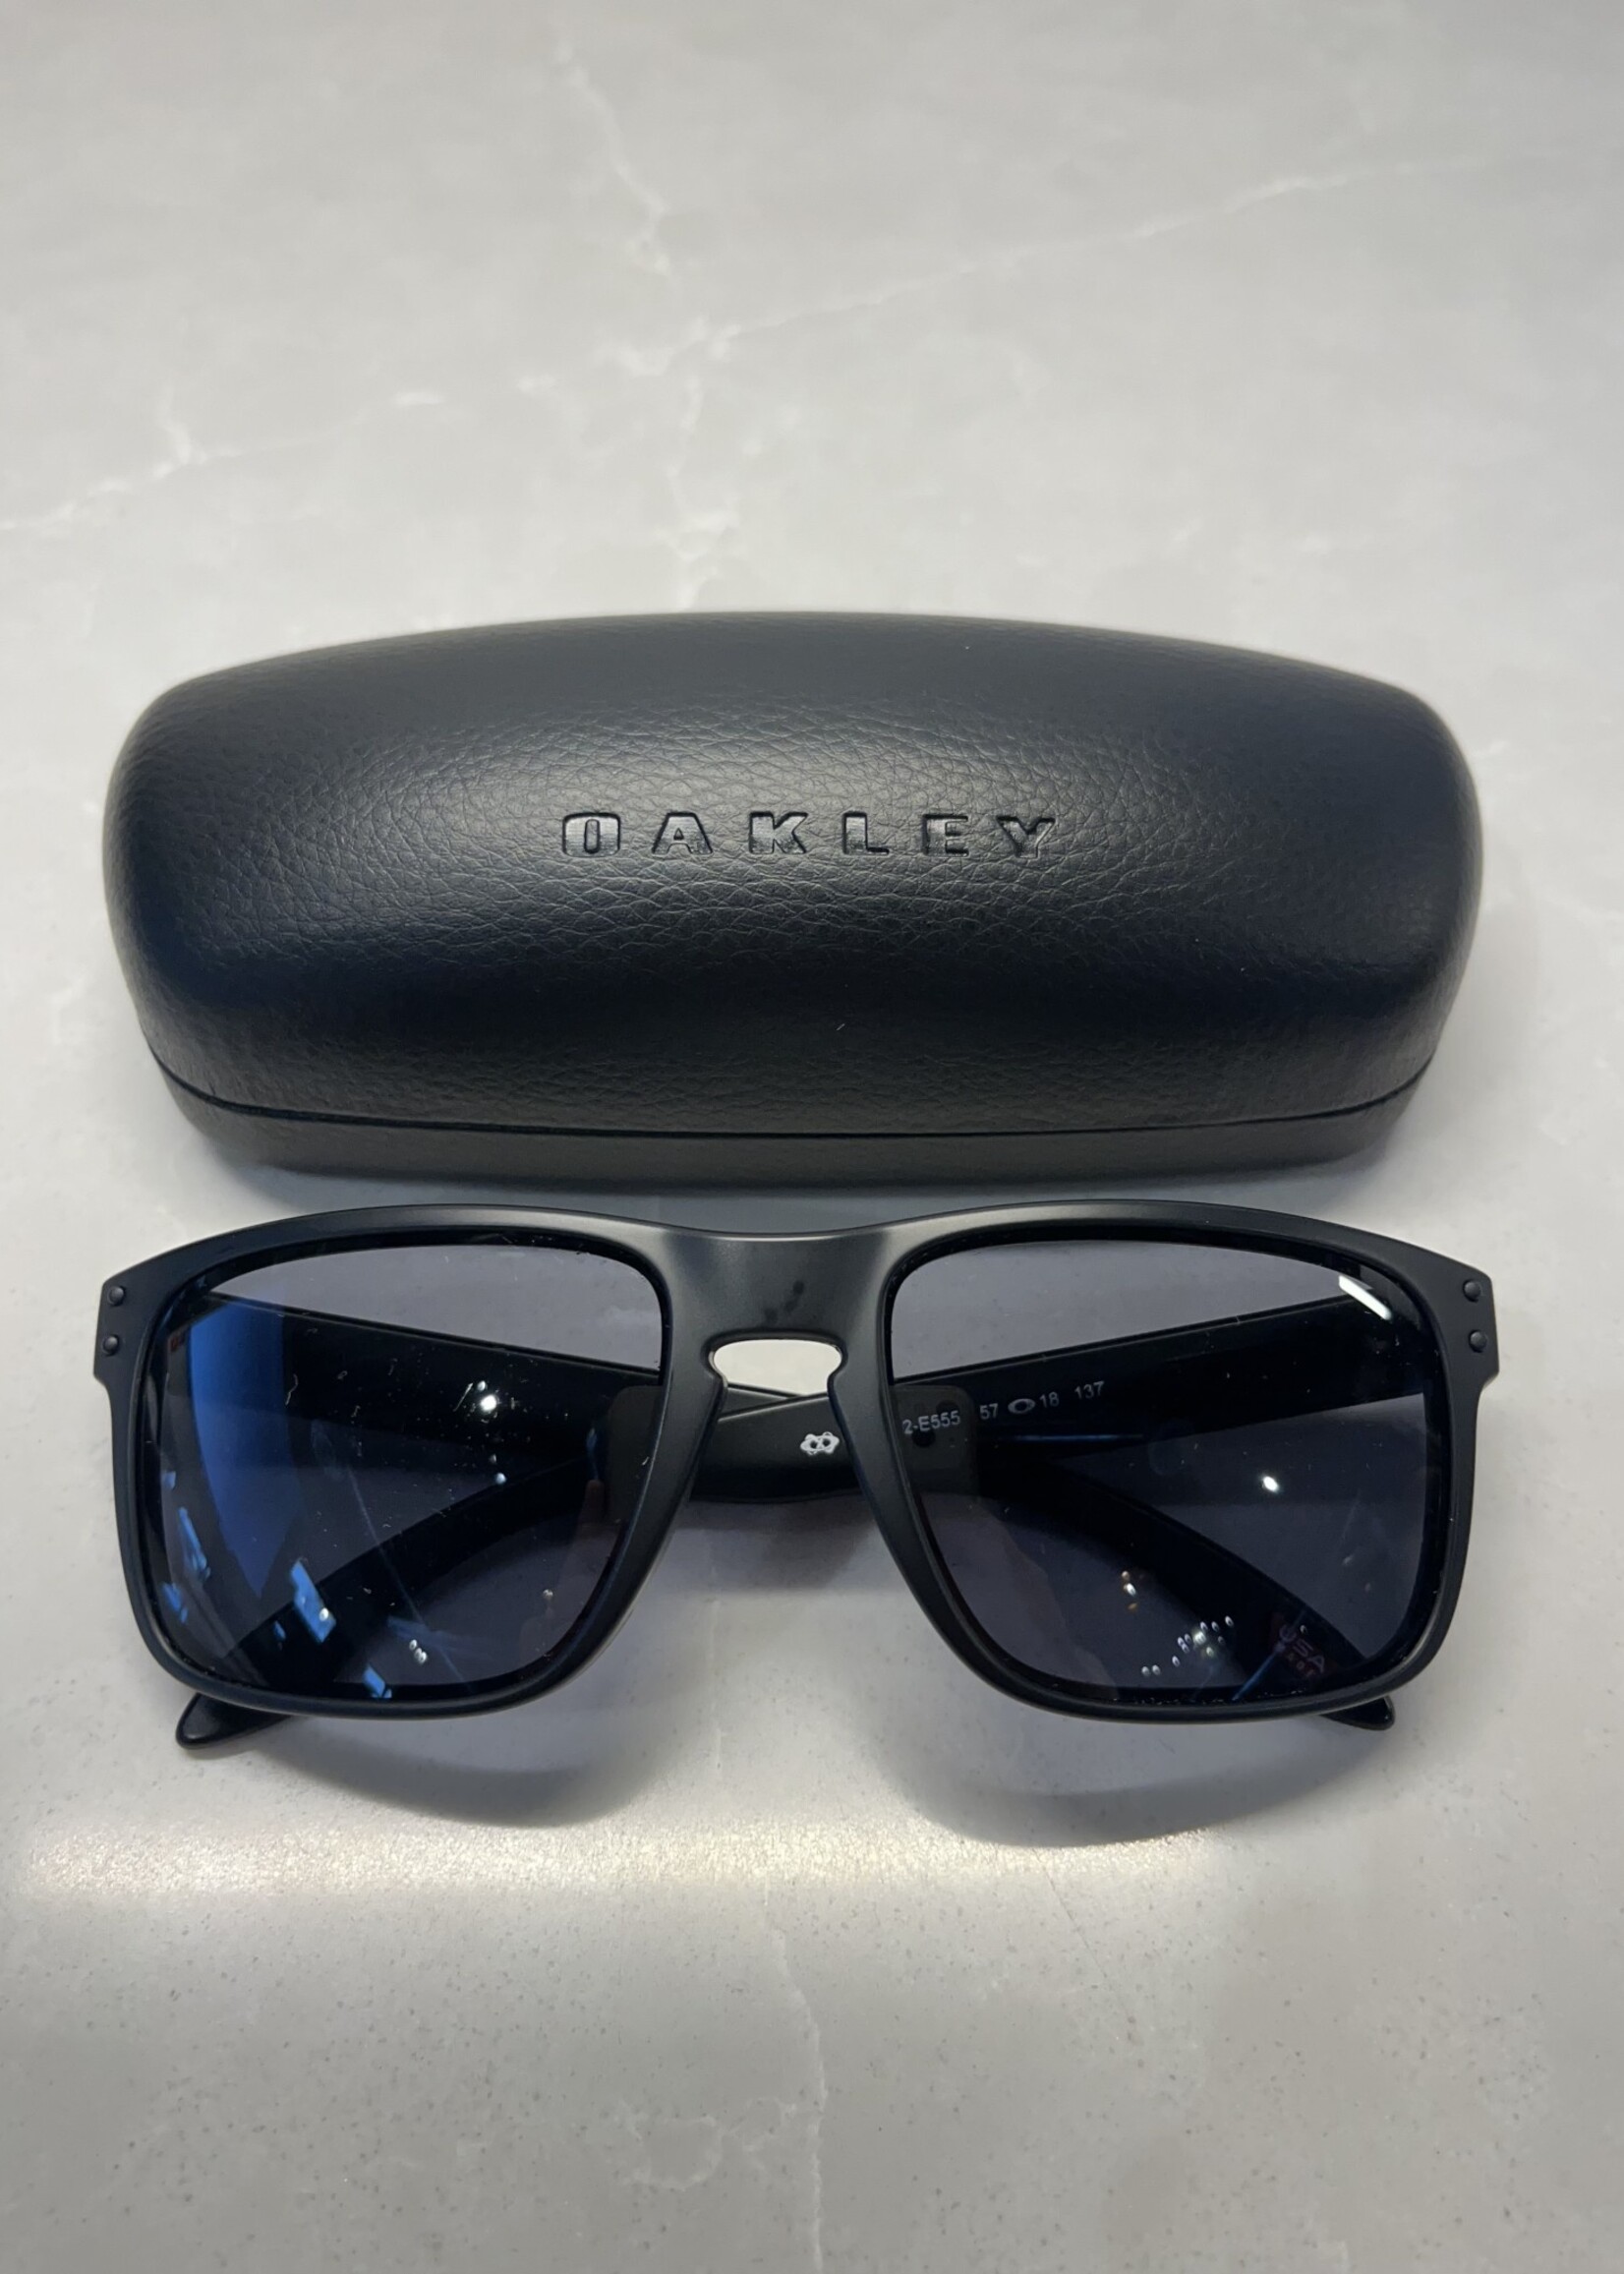 https://cdn.shoplightspeed.com/shops/638826/files/62330433/1652x2313x1/oakley-black-mens-sunglasses-with-case.jpg